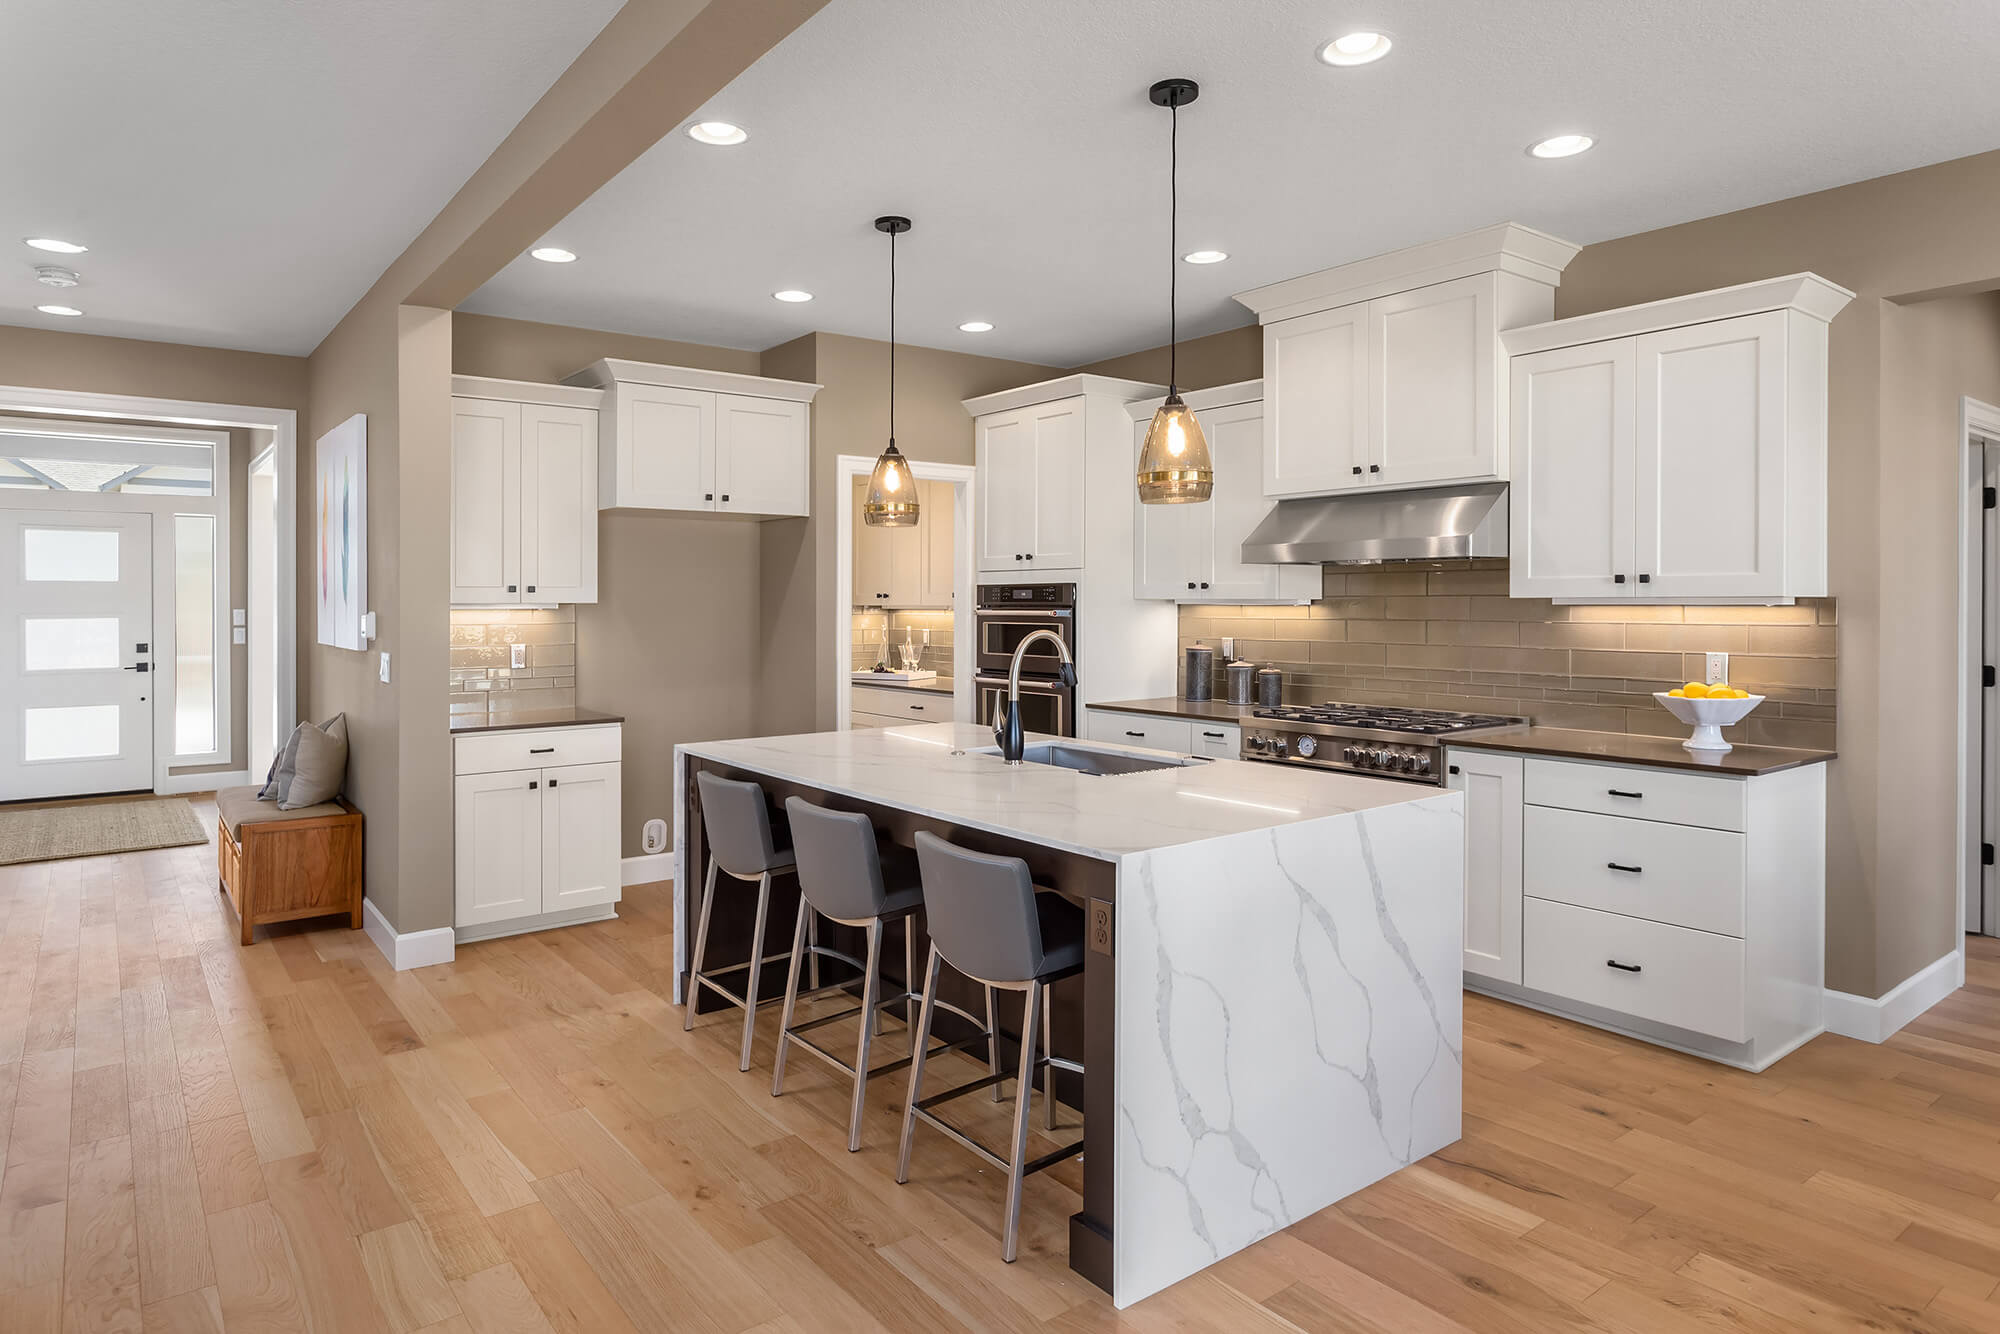 Modern home kitchen with warm lighting